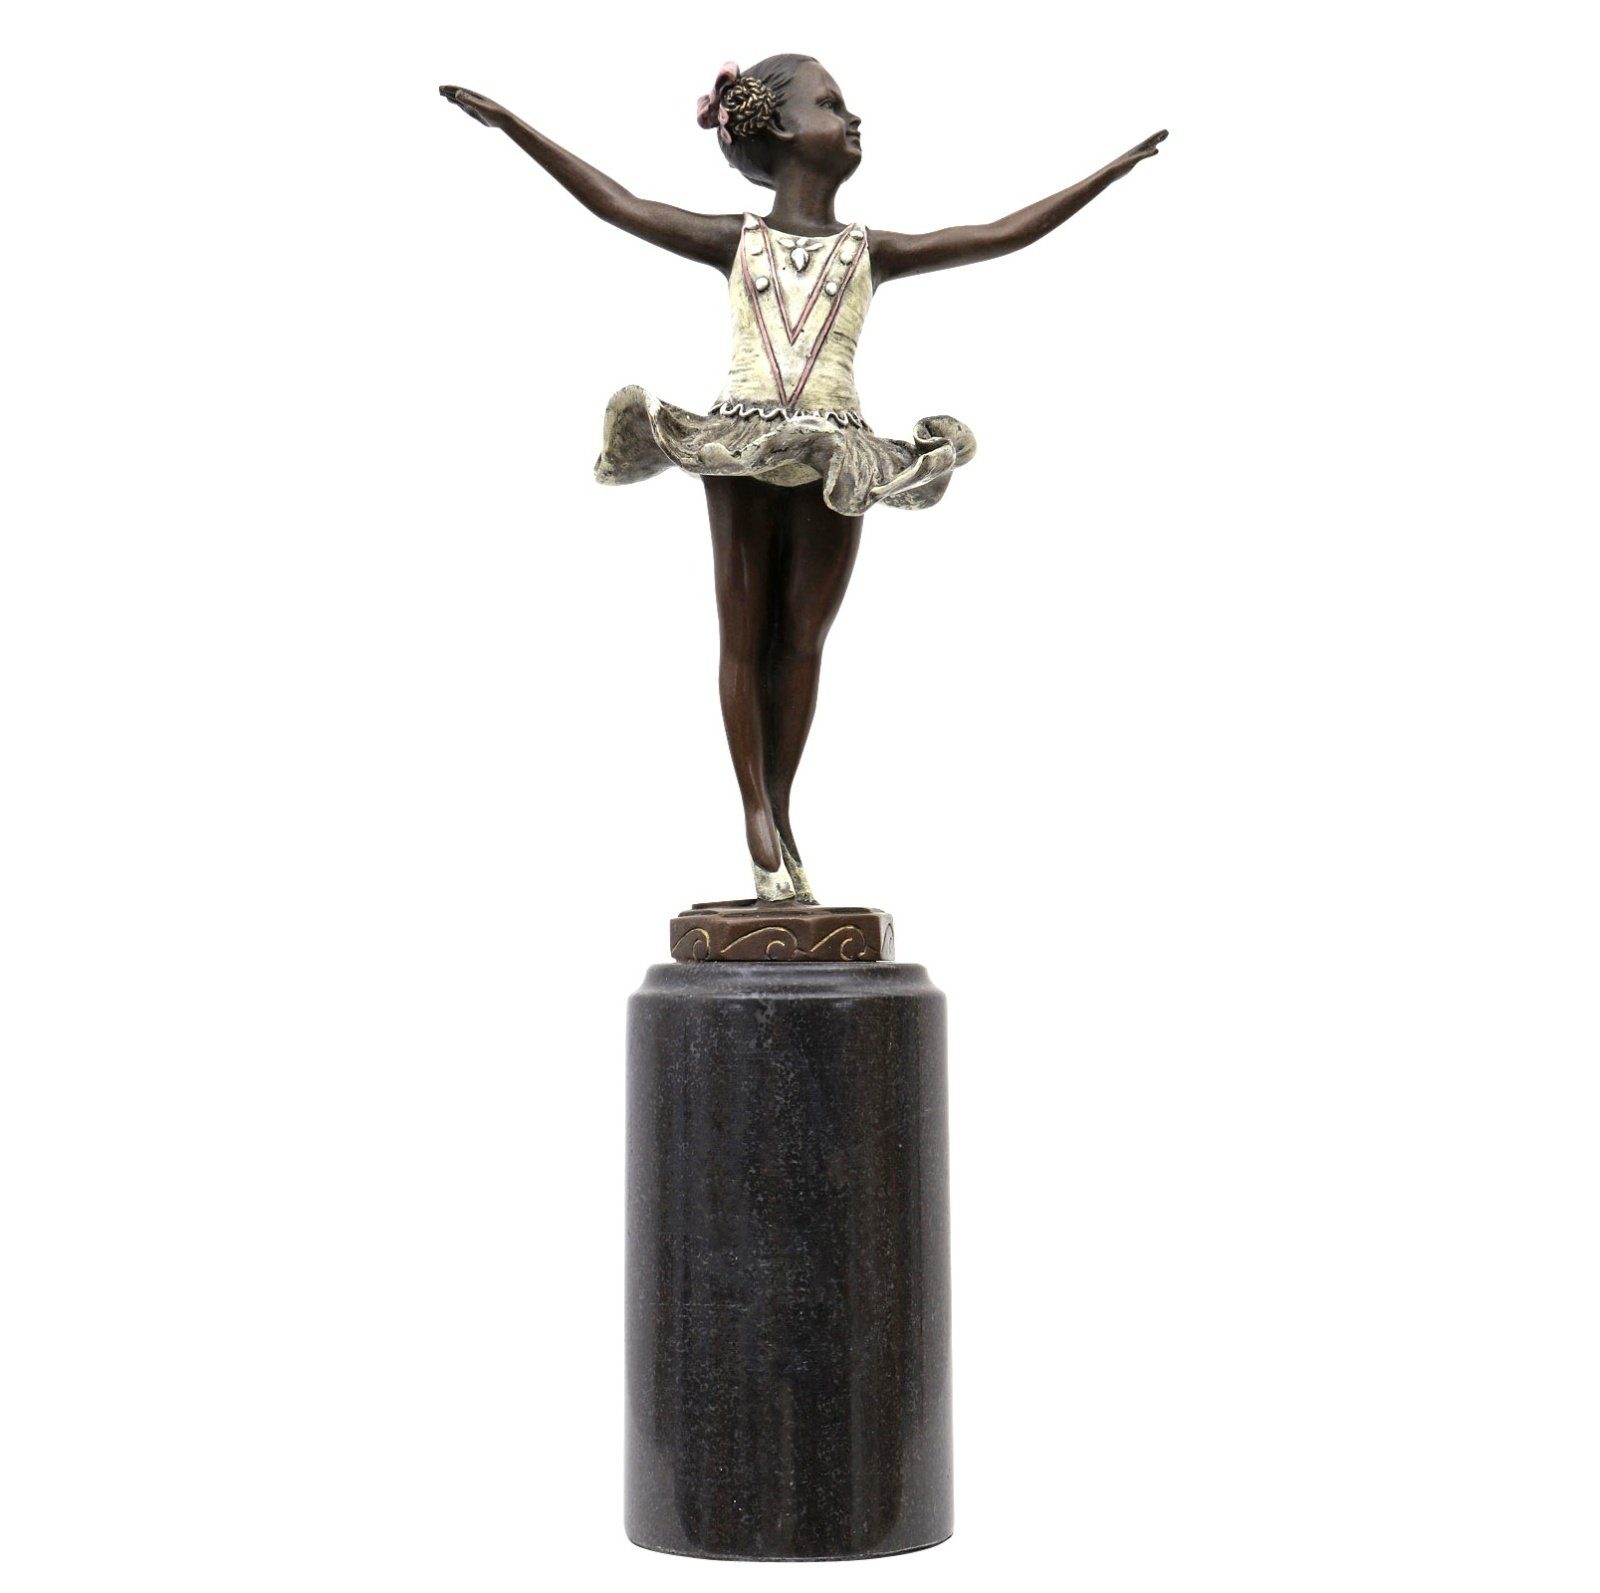 Aubaho Skulptur Bronzeskulptur Ballerina Ballett im Antik-Stil Bronze Figur Statue